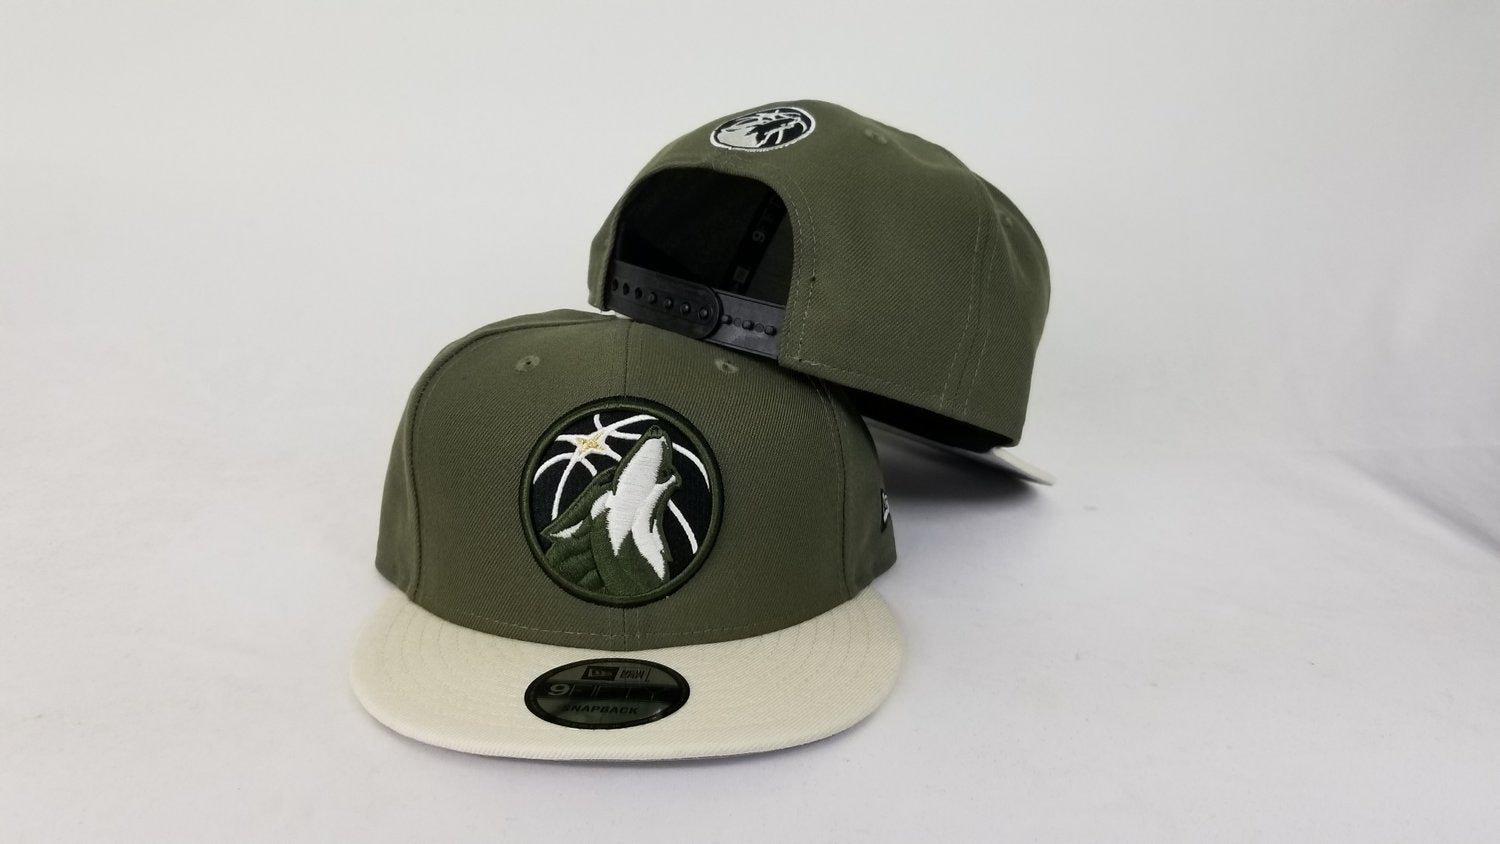 Matching New Era 9Fifty Olive Green Minnesota Timberwolves Snapback Hat for Jordan 12 Chris Paul